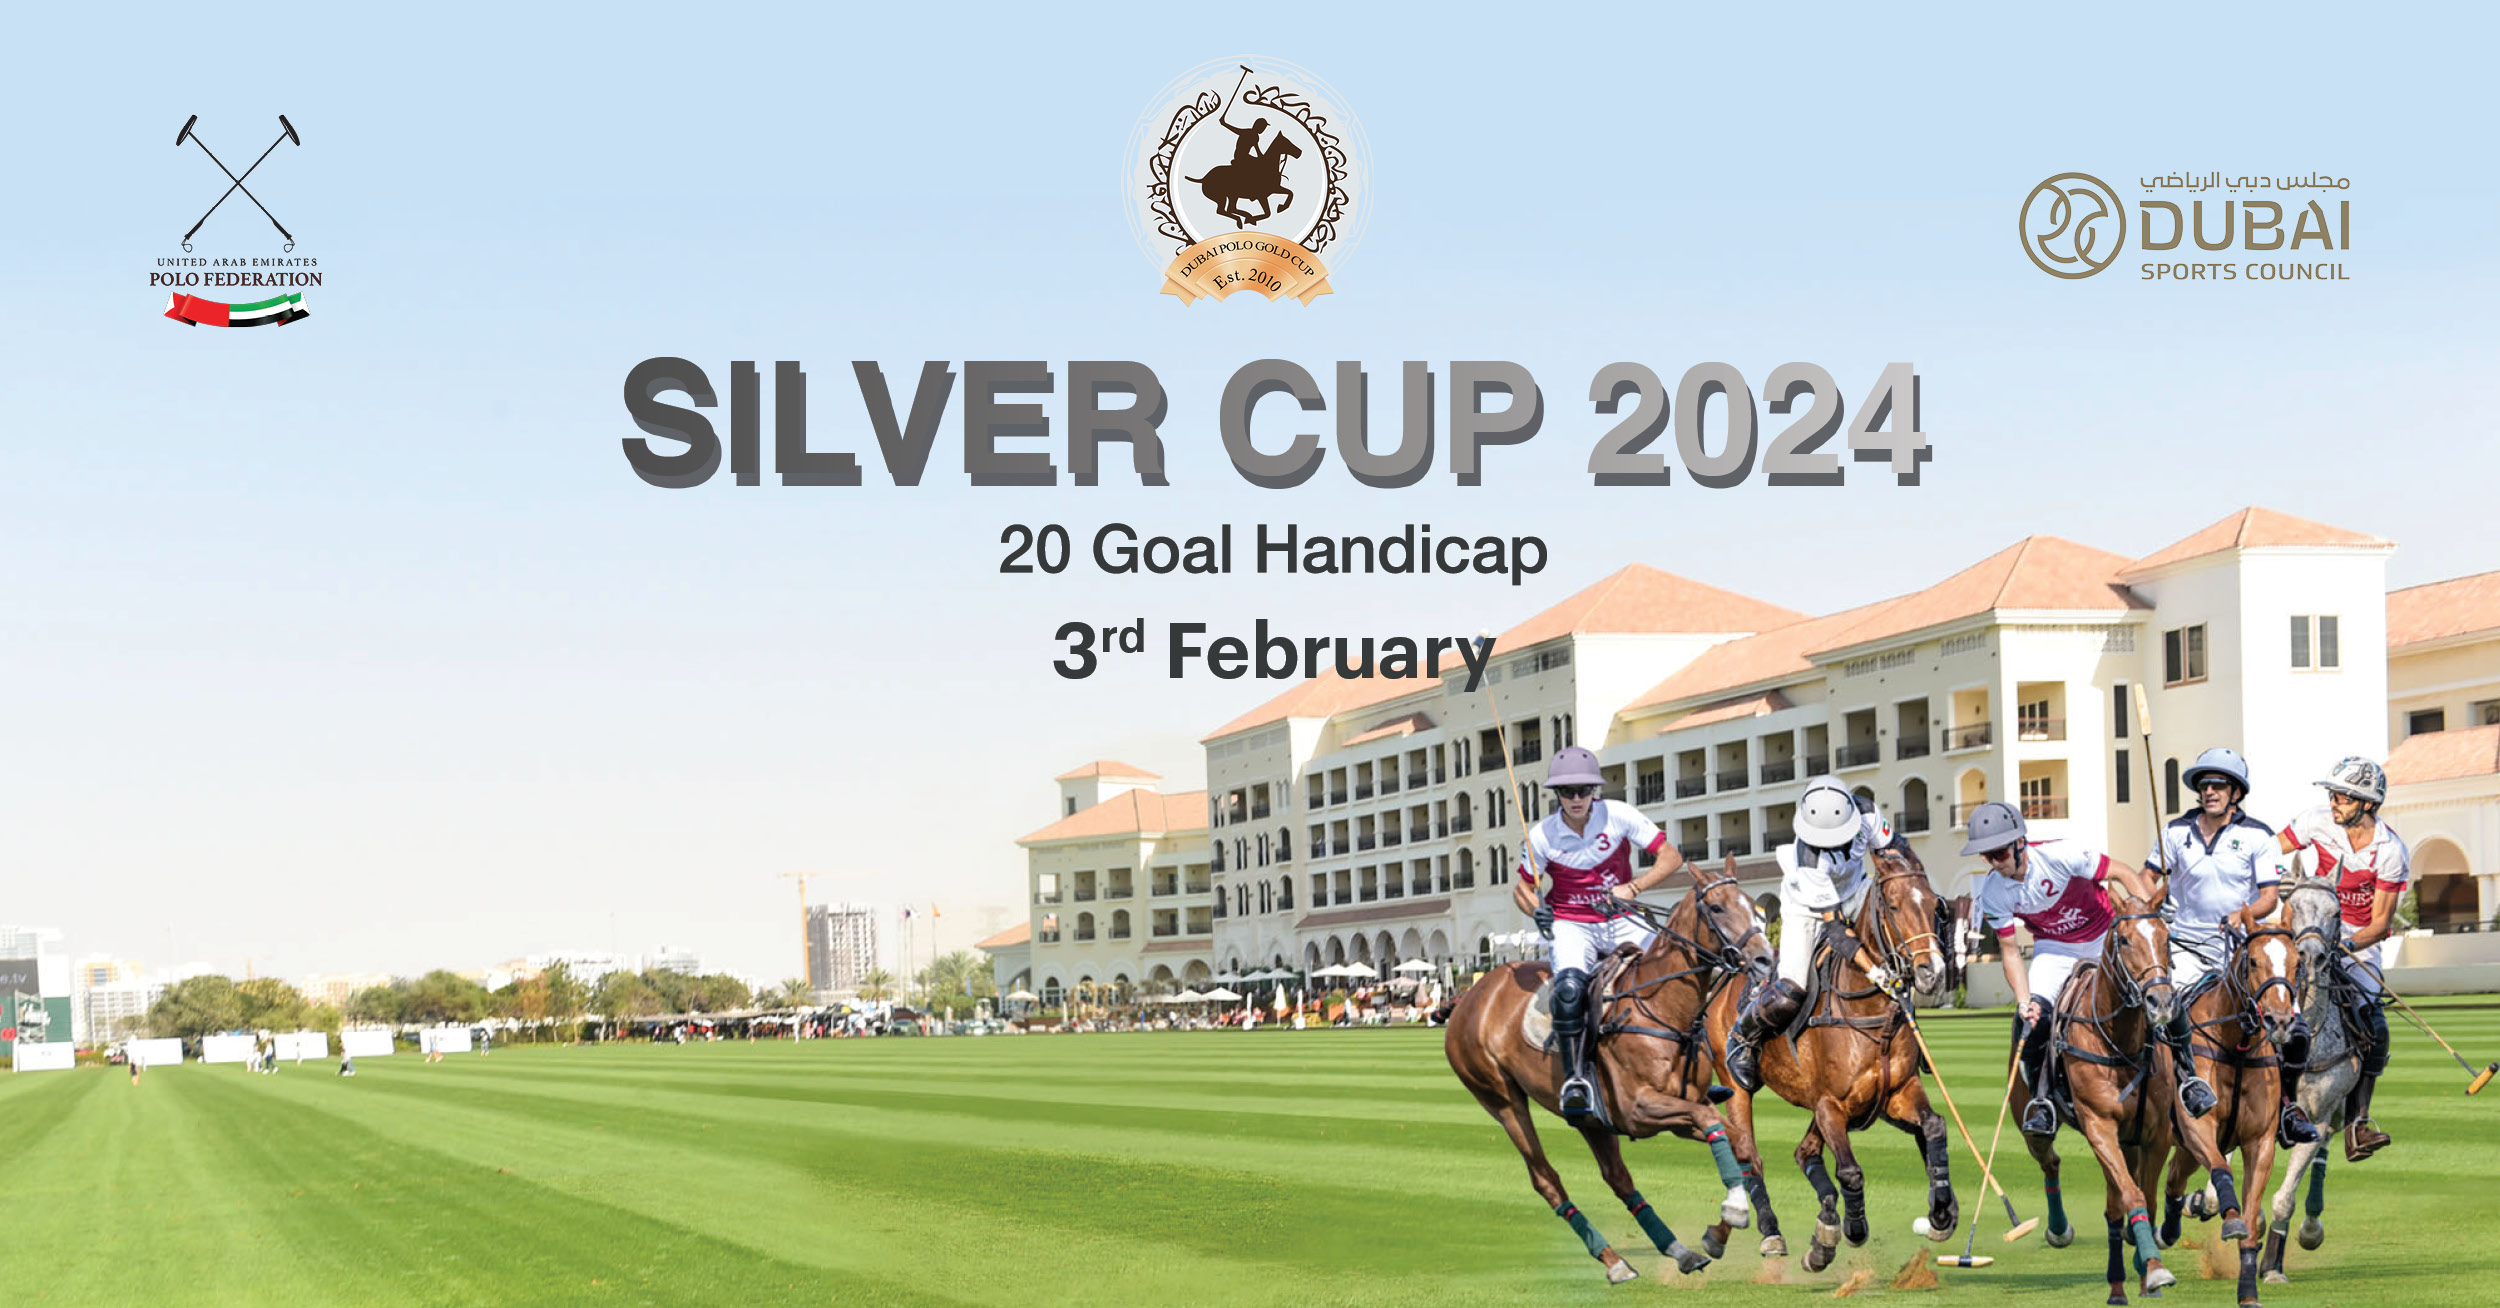 Silver Cup 2024, Dubai, United Arab Emirates